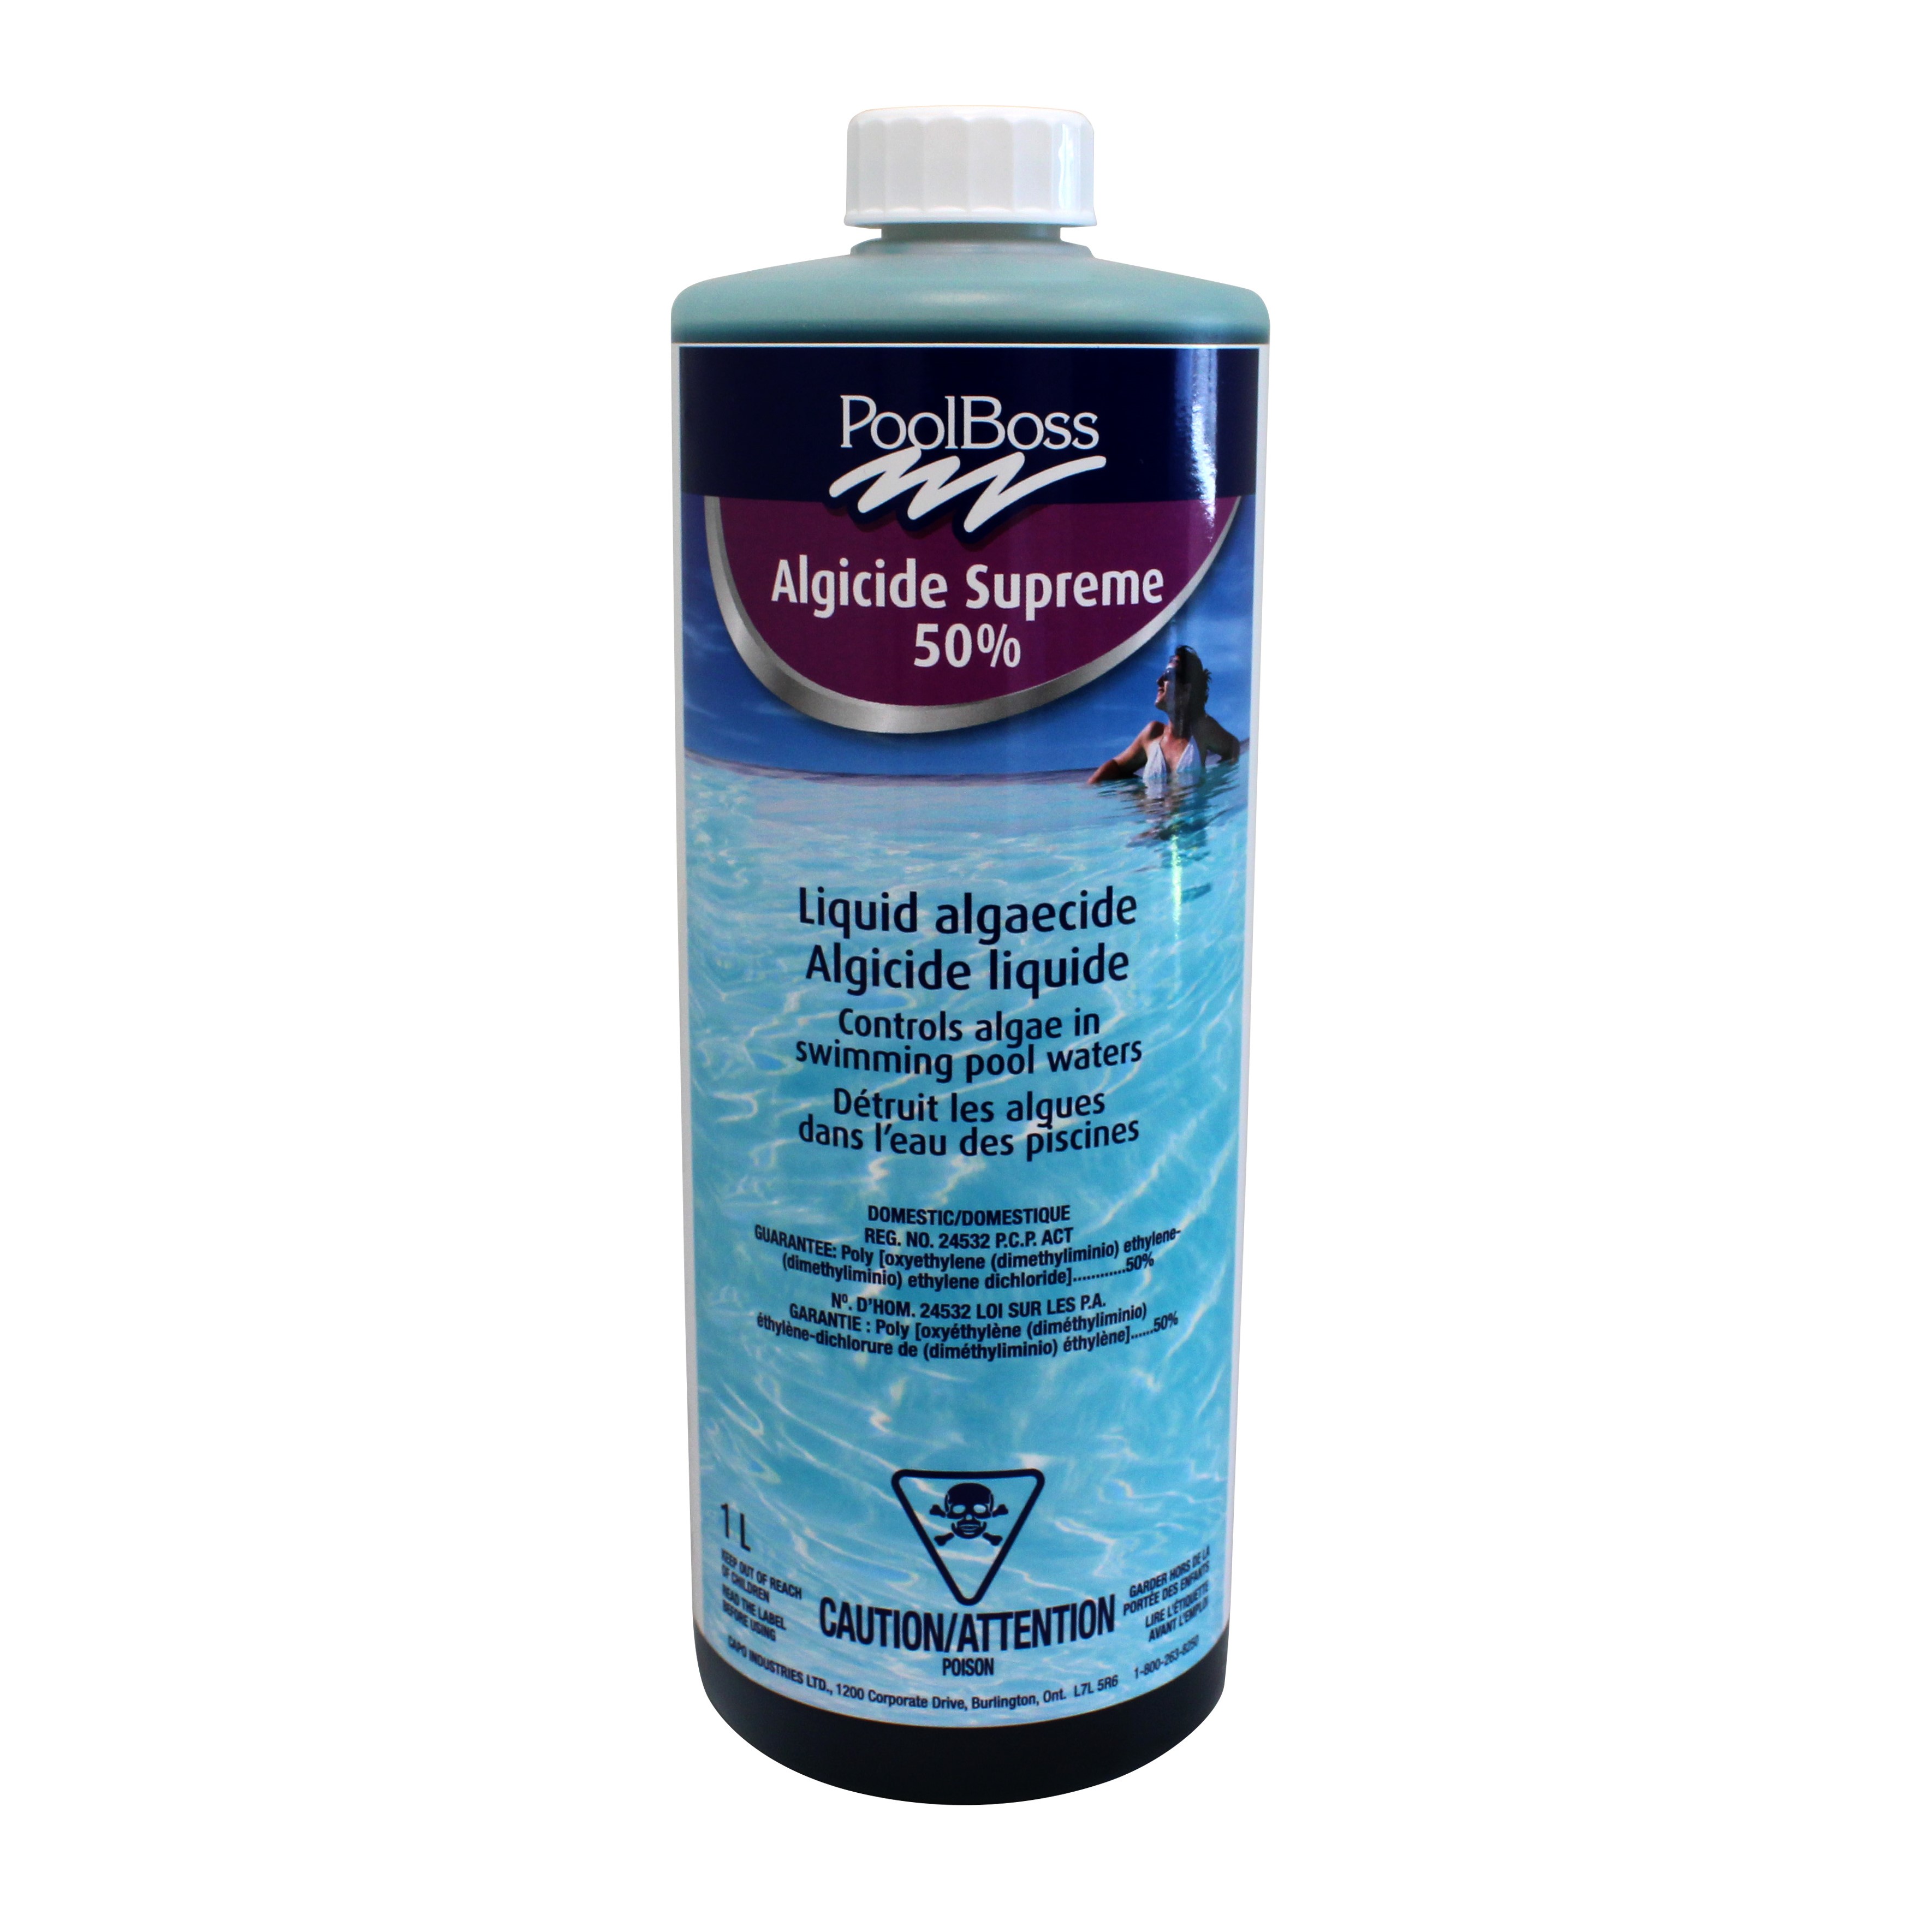 Algicide Supreme 50% - Liquid Algicide for Pools and Spas 1L